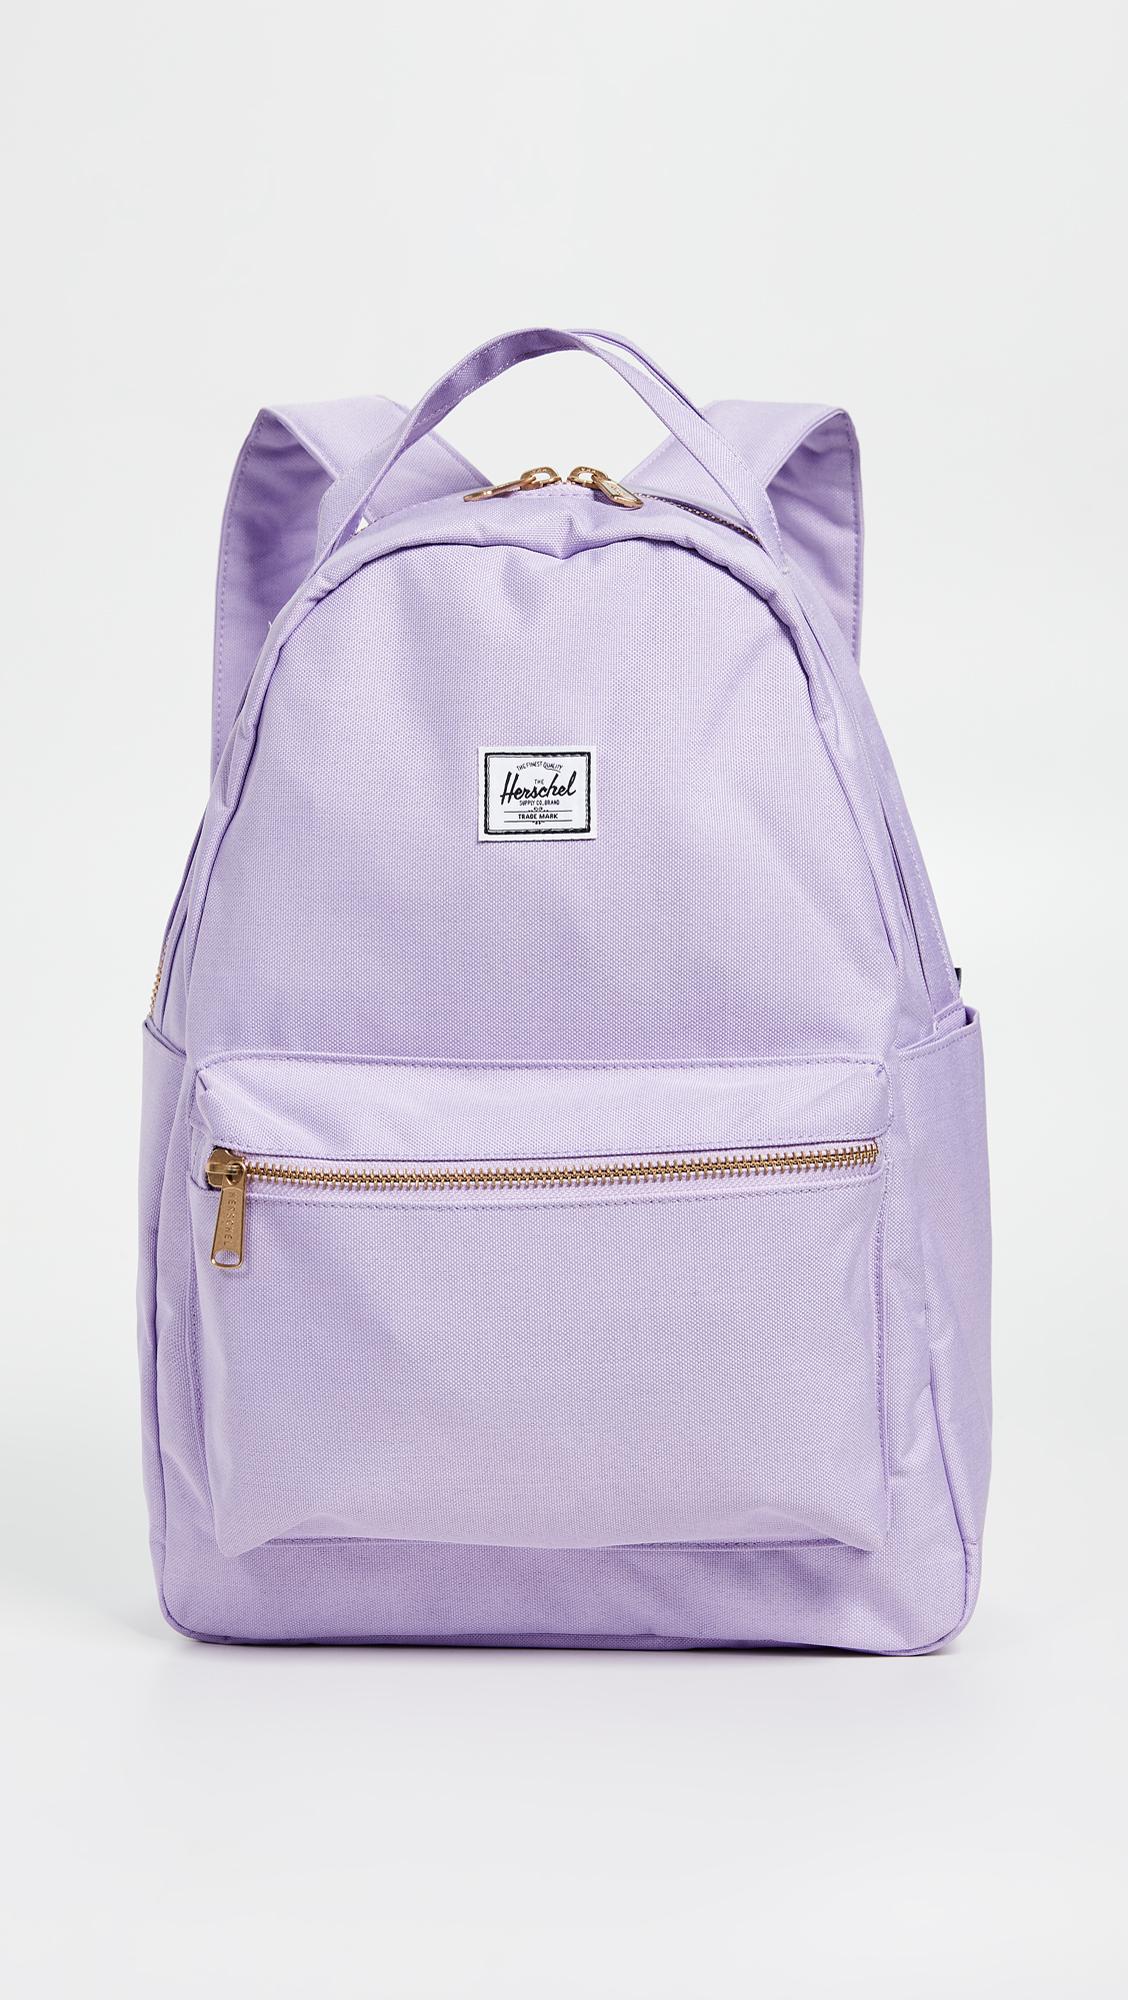 Herschel Supply Co. Nova Mid-volume Backpack in Purple - Lyst